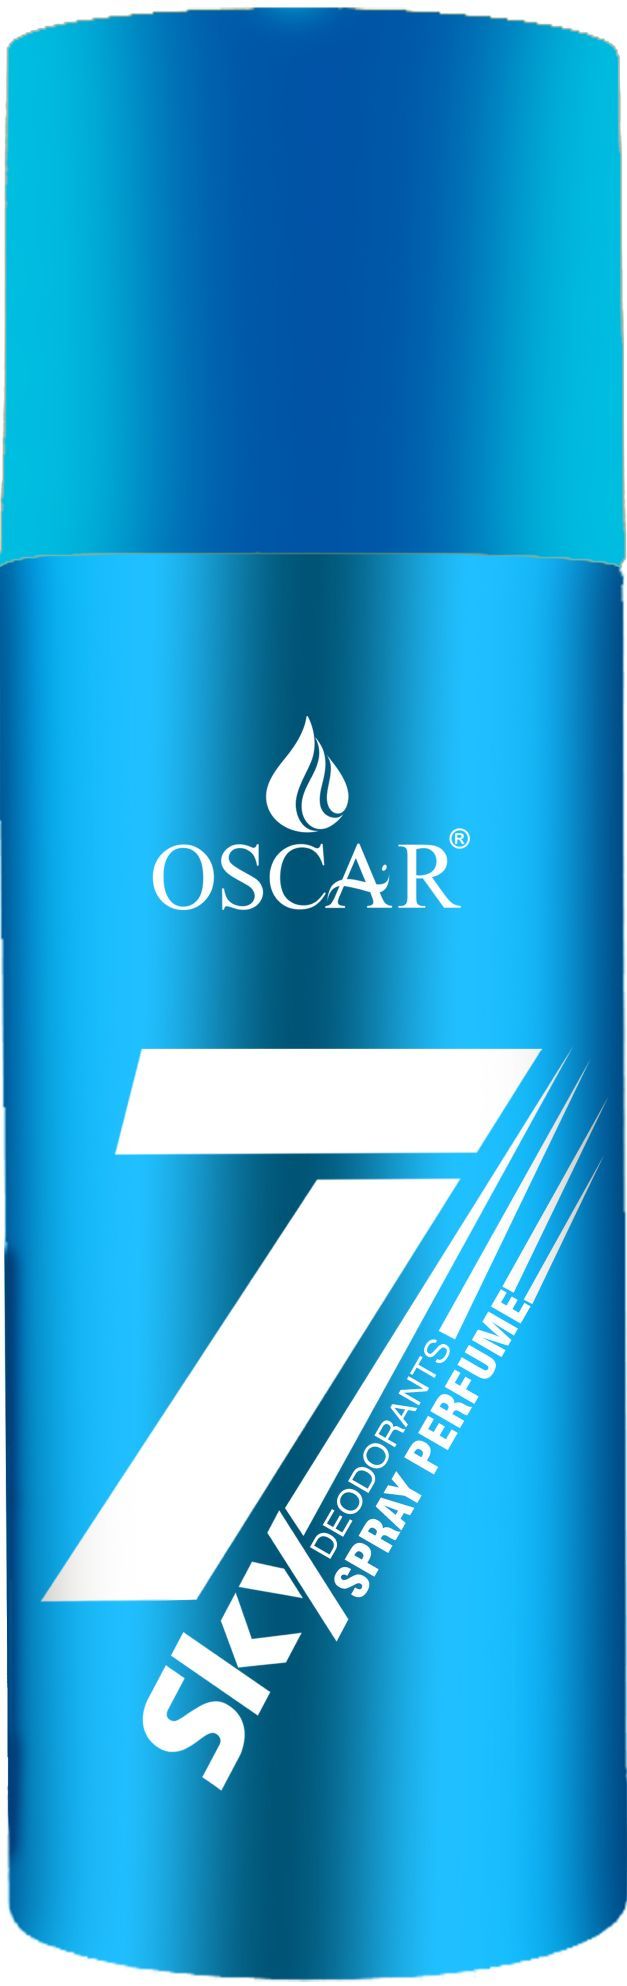 Oscar 7 Sky Deodorant